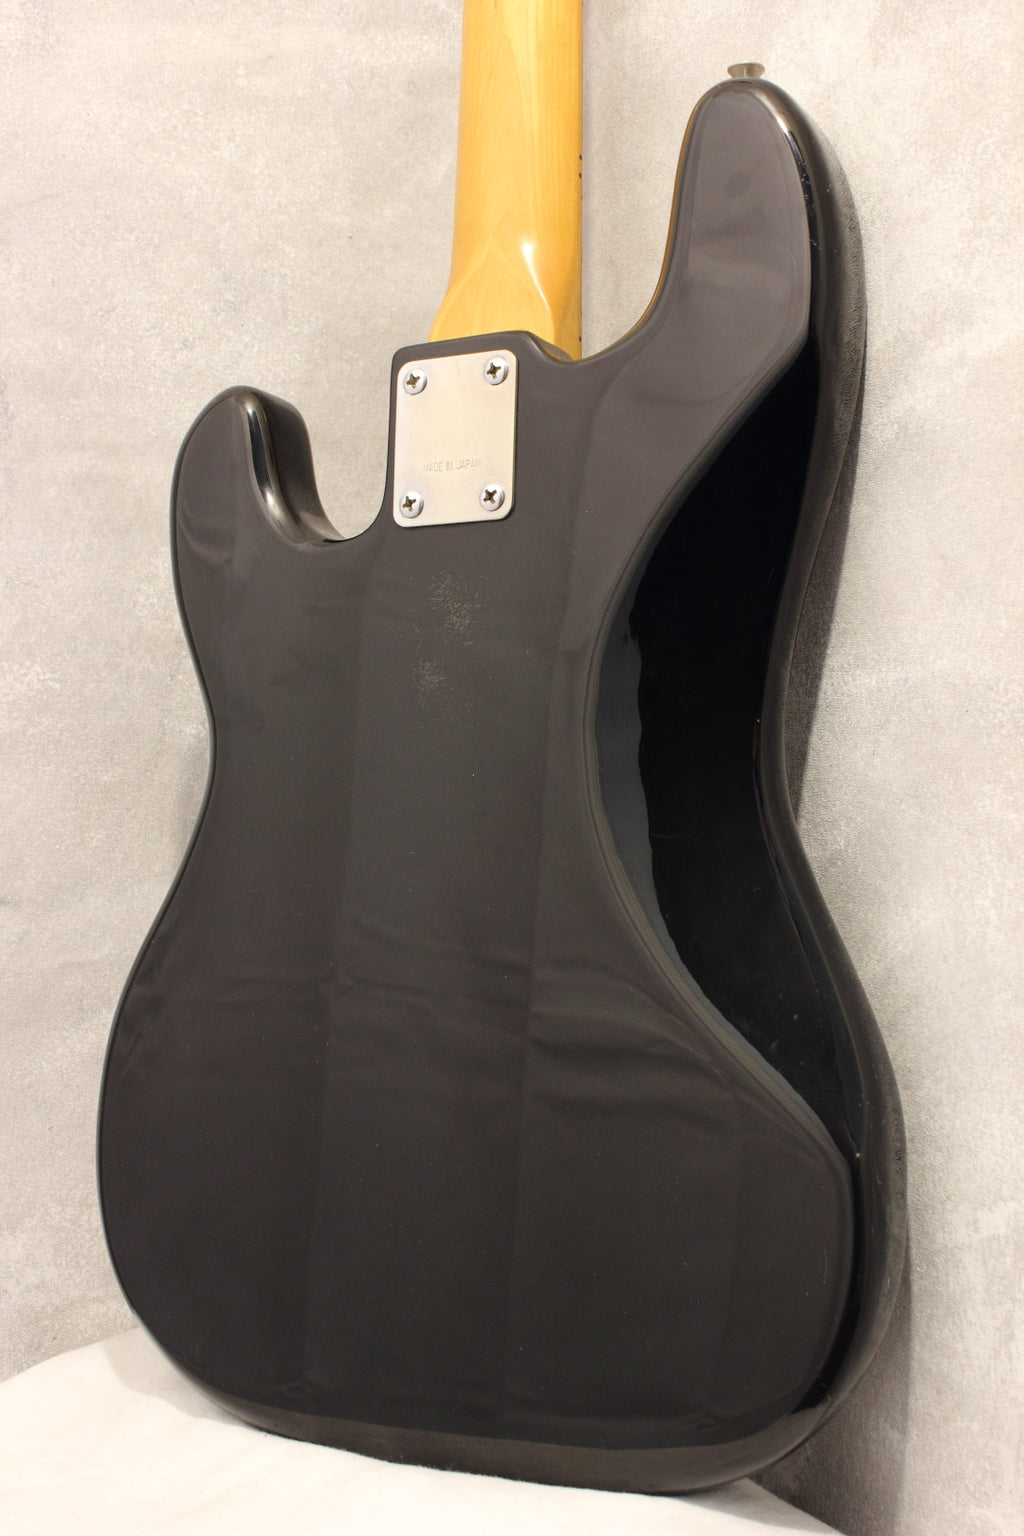 Yamaha PB400 Pulser Bass Black 1980